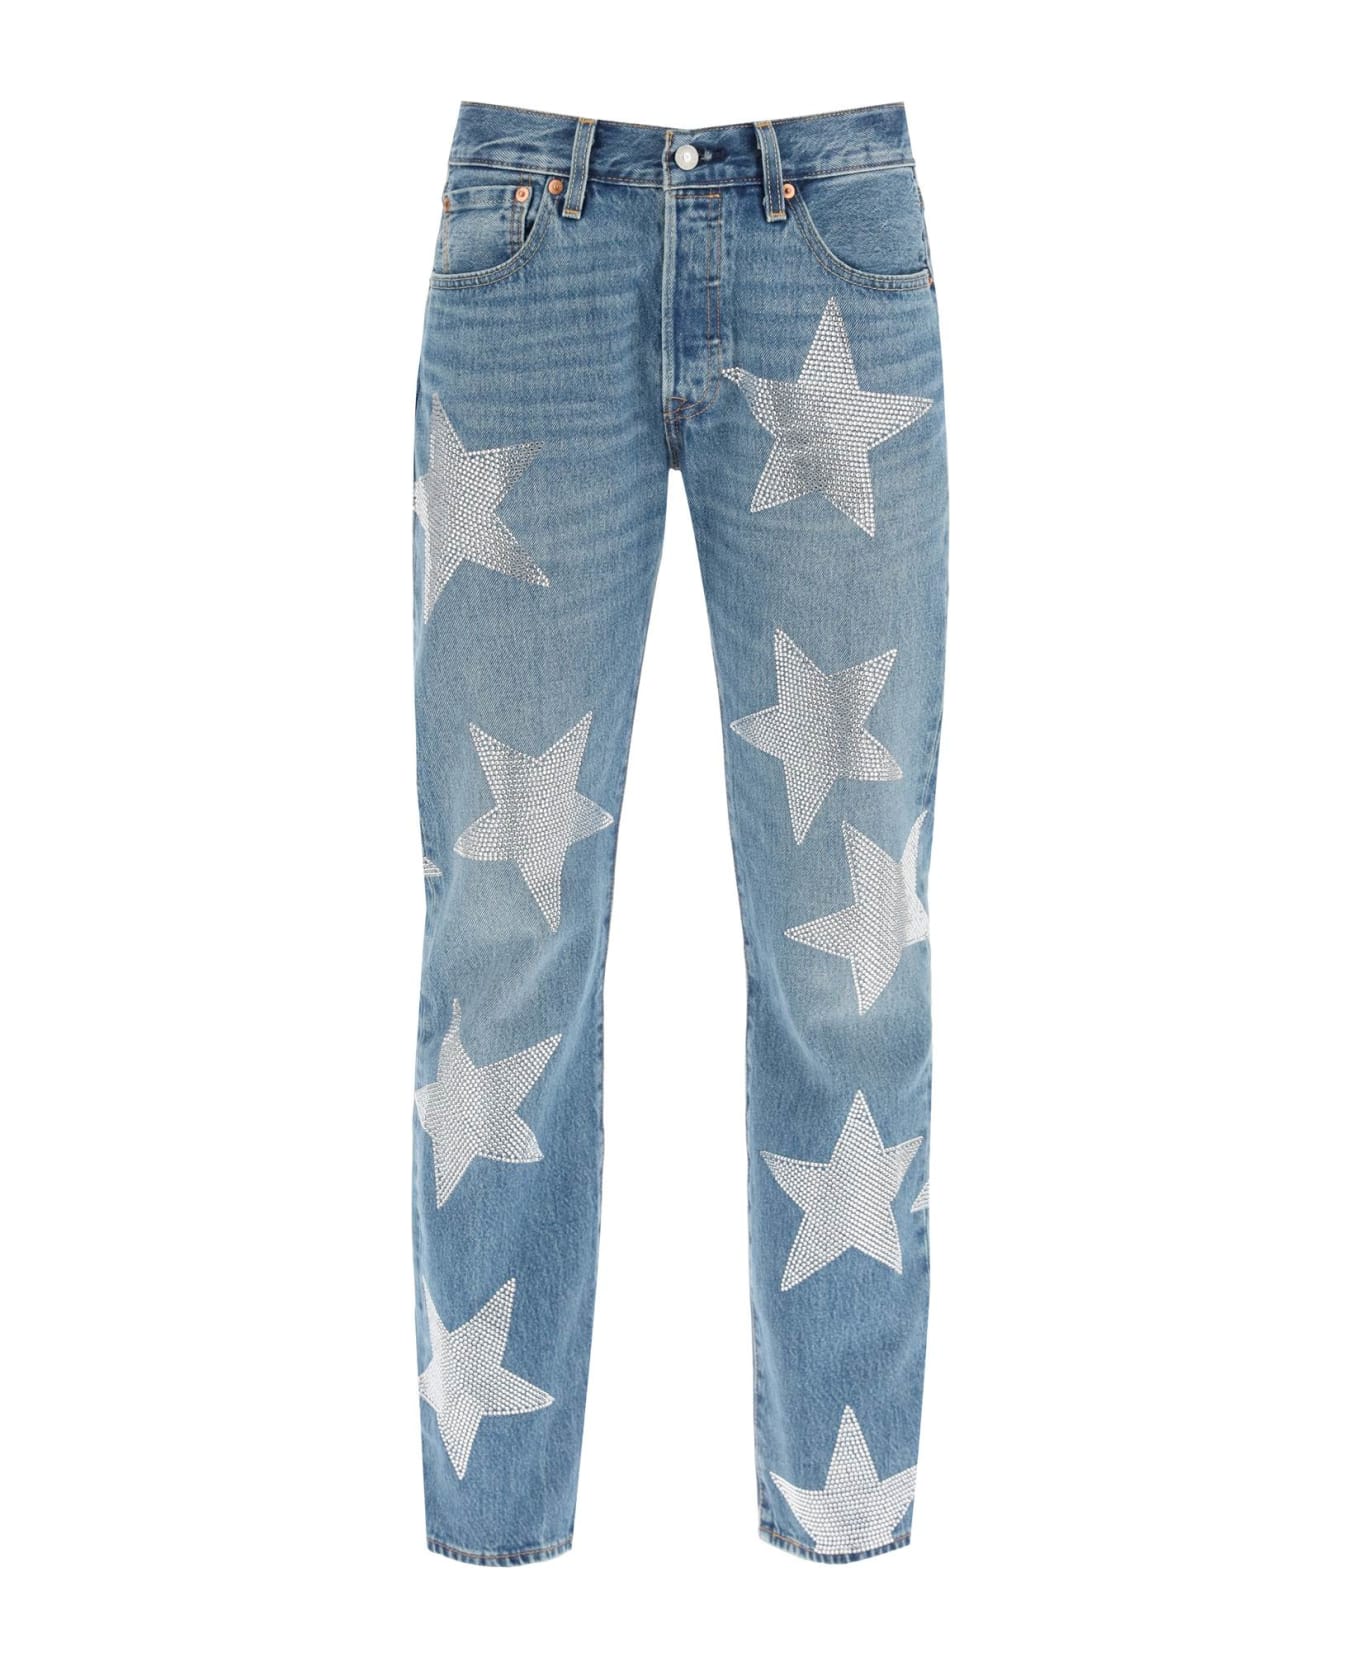 Collina Strada 'rhinestone Star' Jeans X Levis - SILVER STAR (Blue)